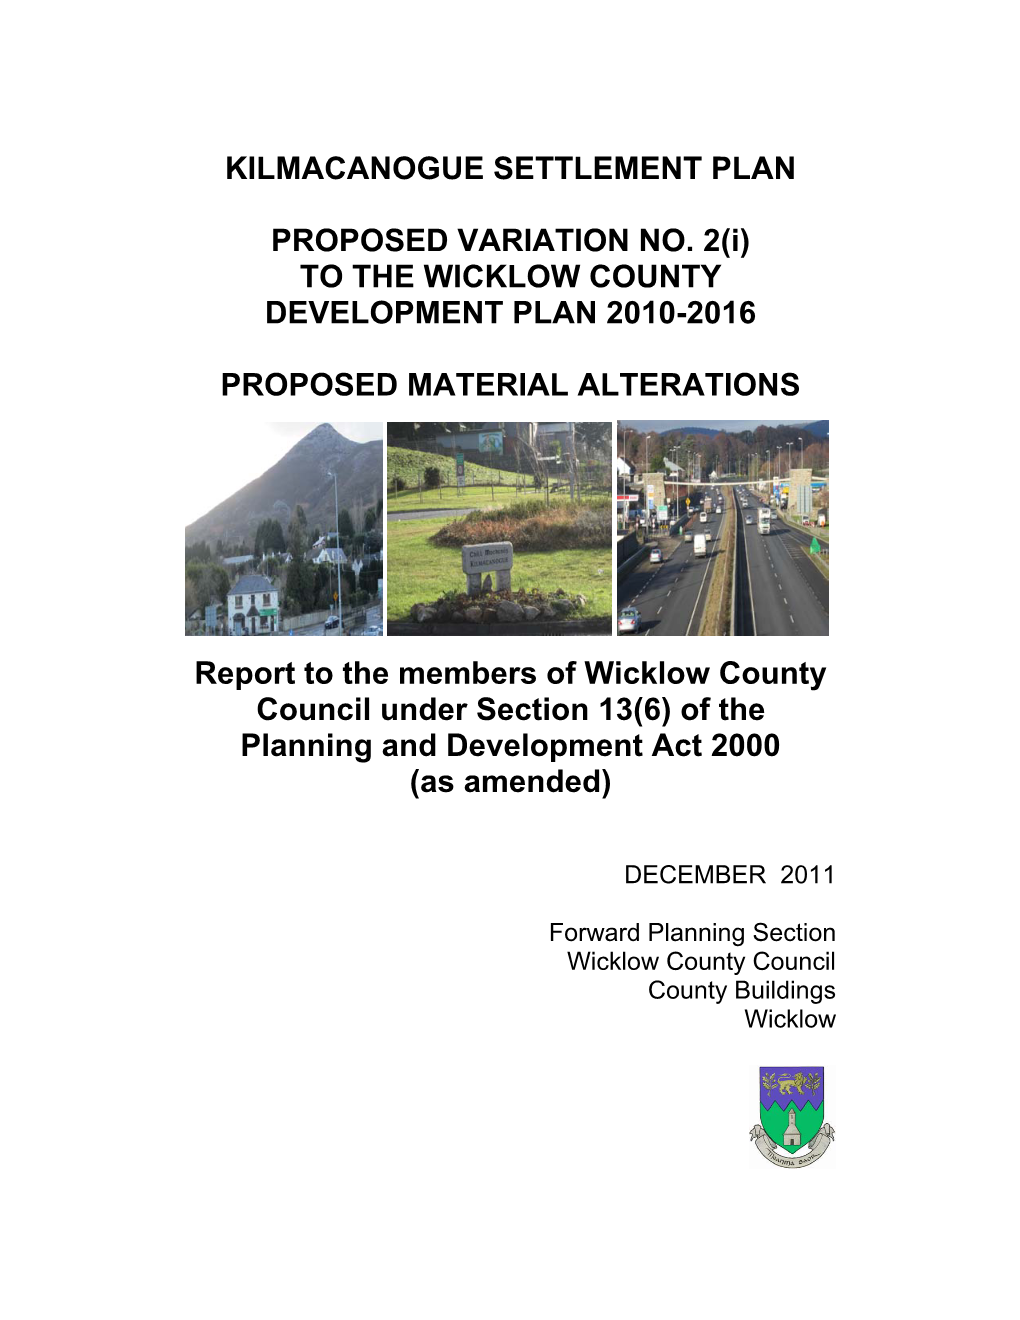 Kilmacanogue Settlement Plan Proposed Variation No